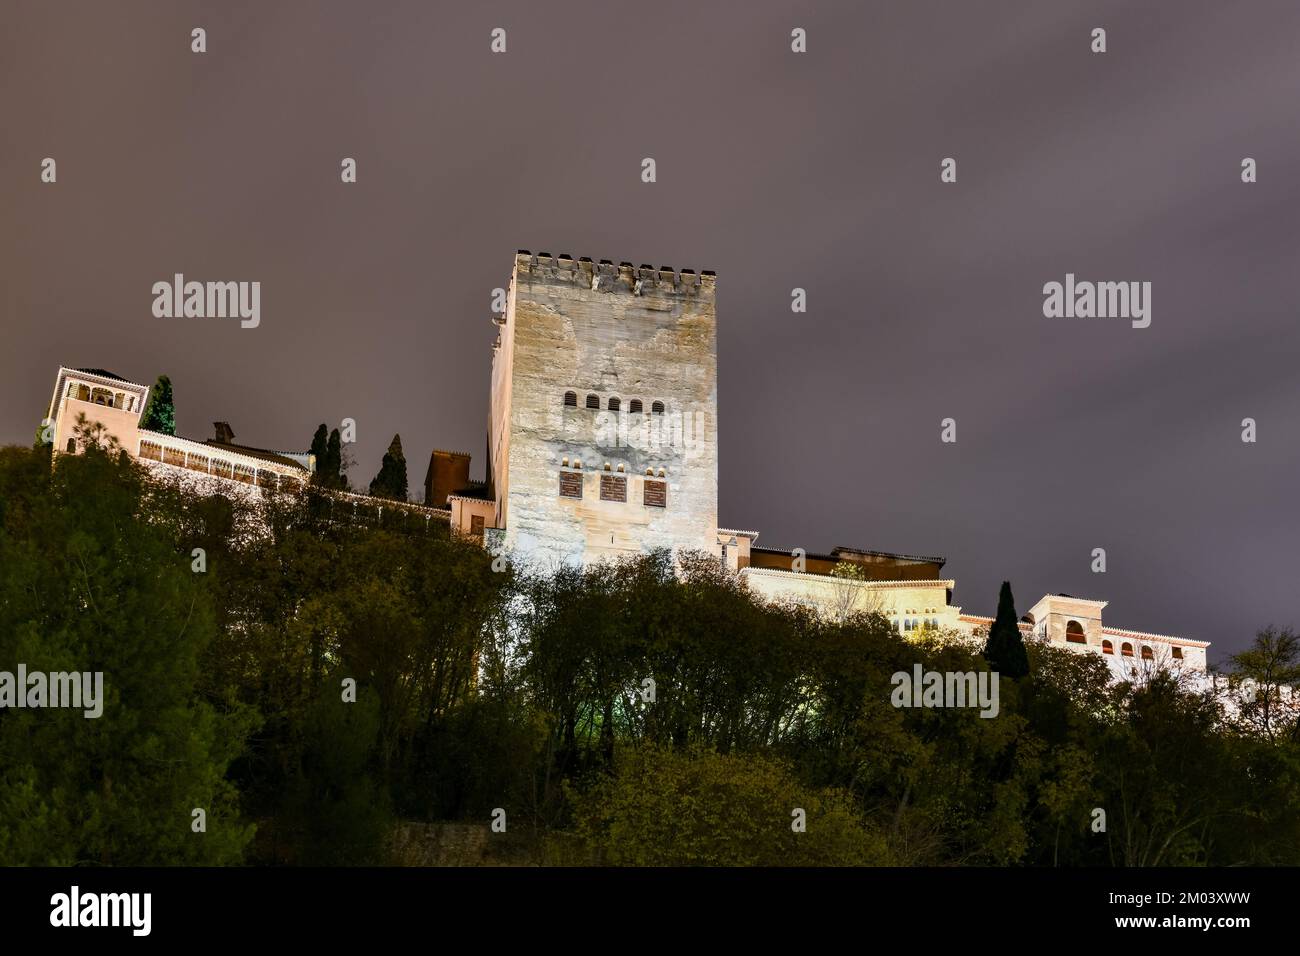 View of illuminated Alhambra Palace in Granada, Spain at night. Stock Photo